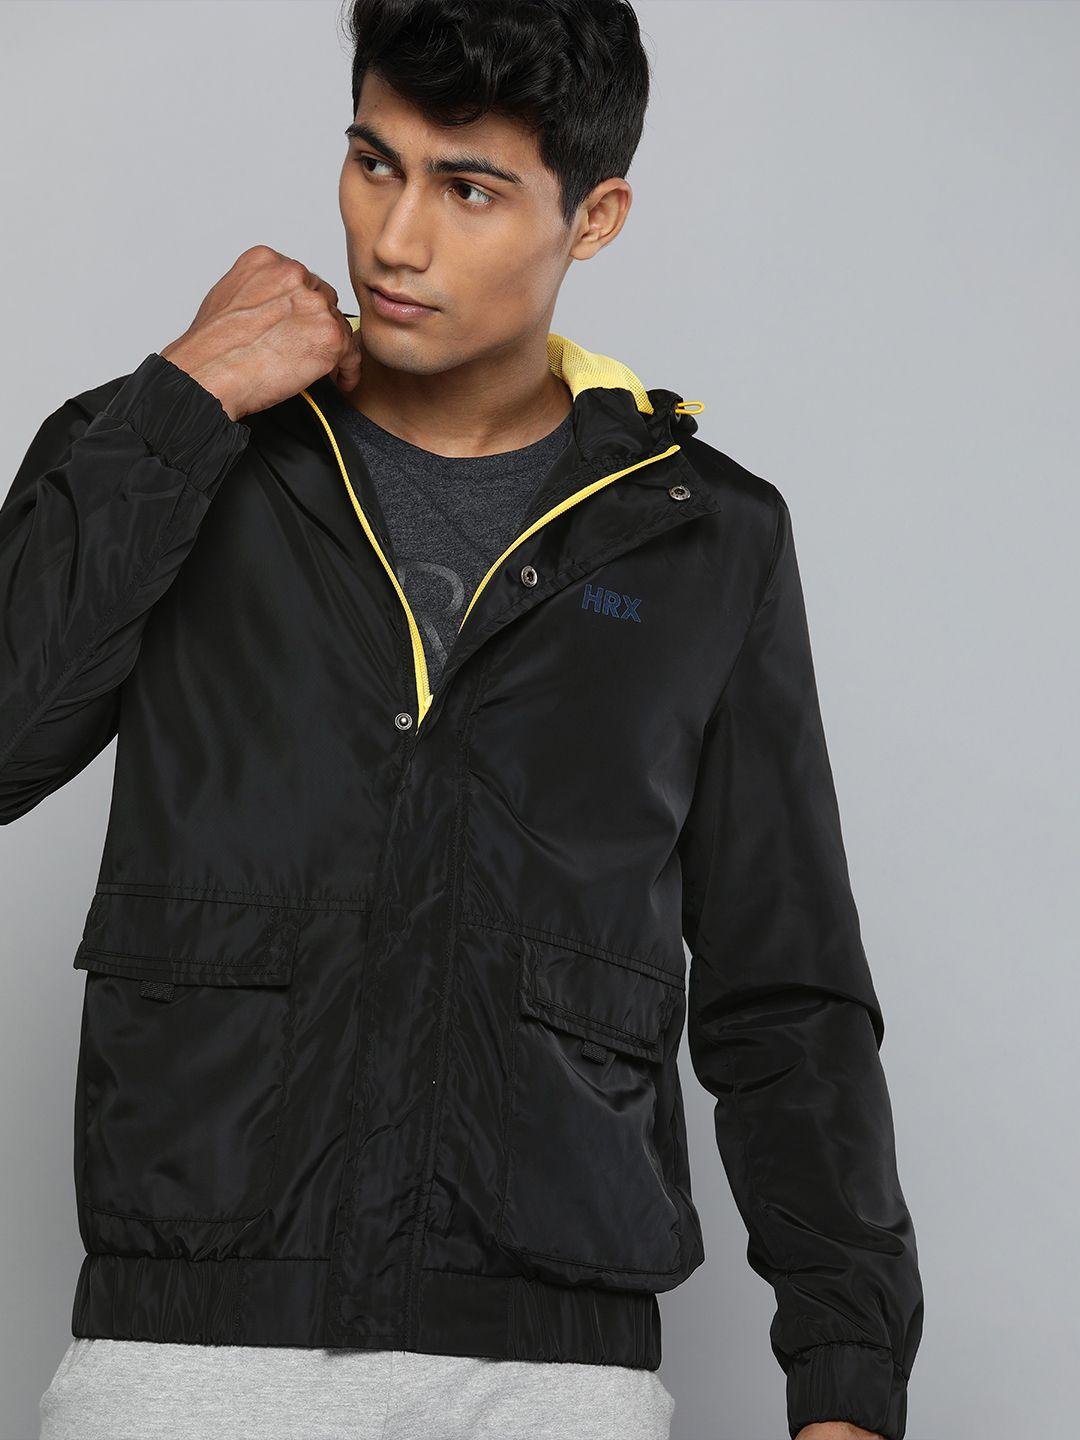 hrx by hrithik roshan lifestyle men black rapid-dry solid jackets